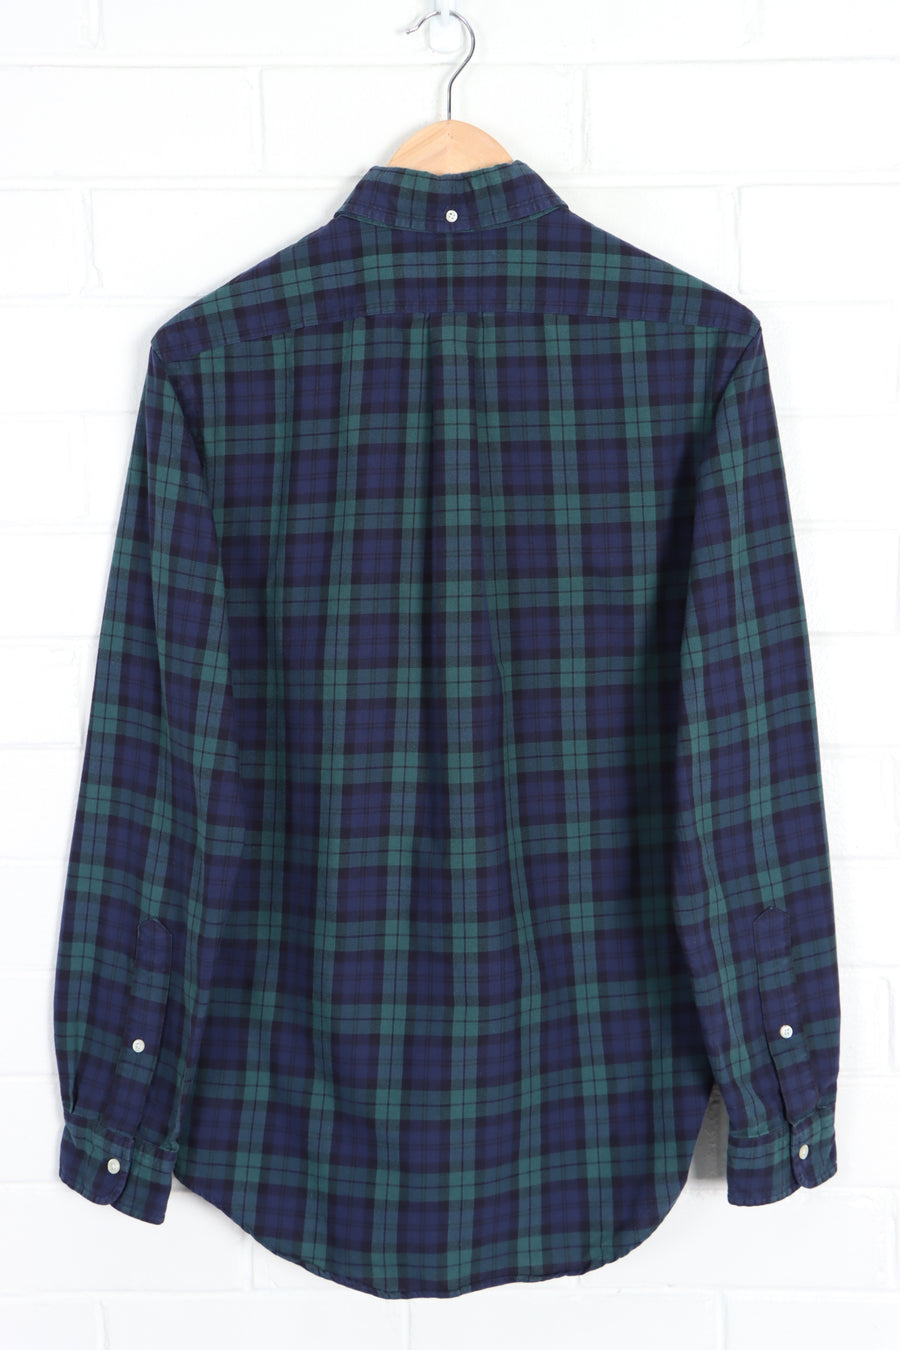 RALPH LAUREN Tartan Slim Fit Long Sleeve Shirt (M) - Vintage Sole Melbourne